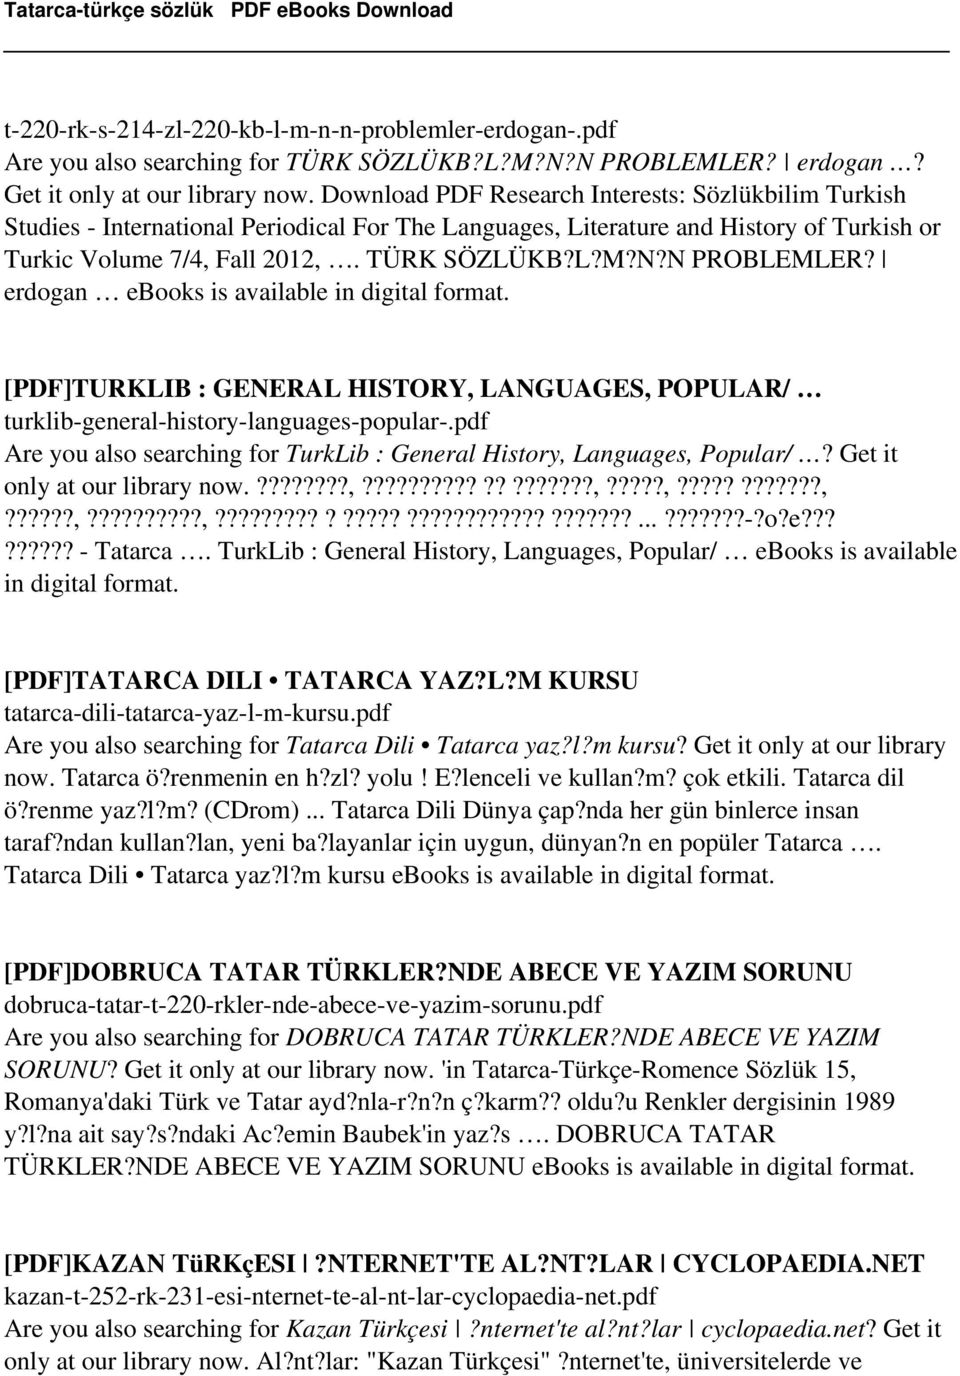 N PROBLEMLER? erdogan ebooks is [PDF]TURKLIB : GENERAL HISTORY, LANGUAGES, POPULAR/ turklib-general-history-languages-popular-.